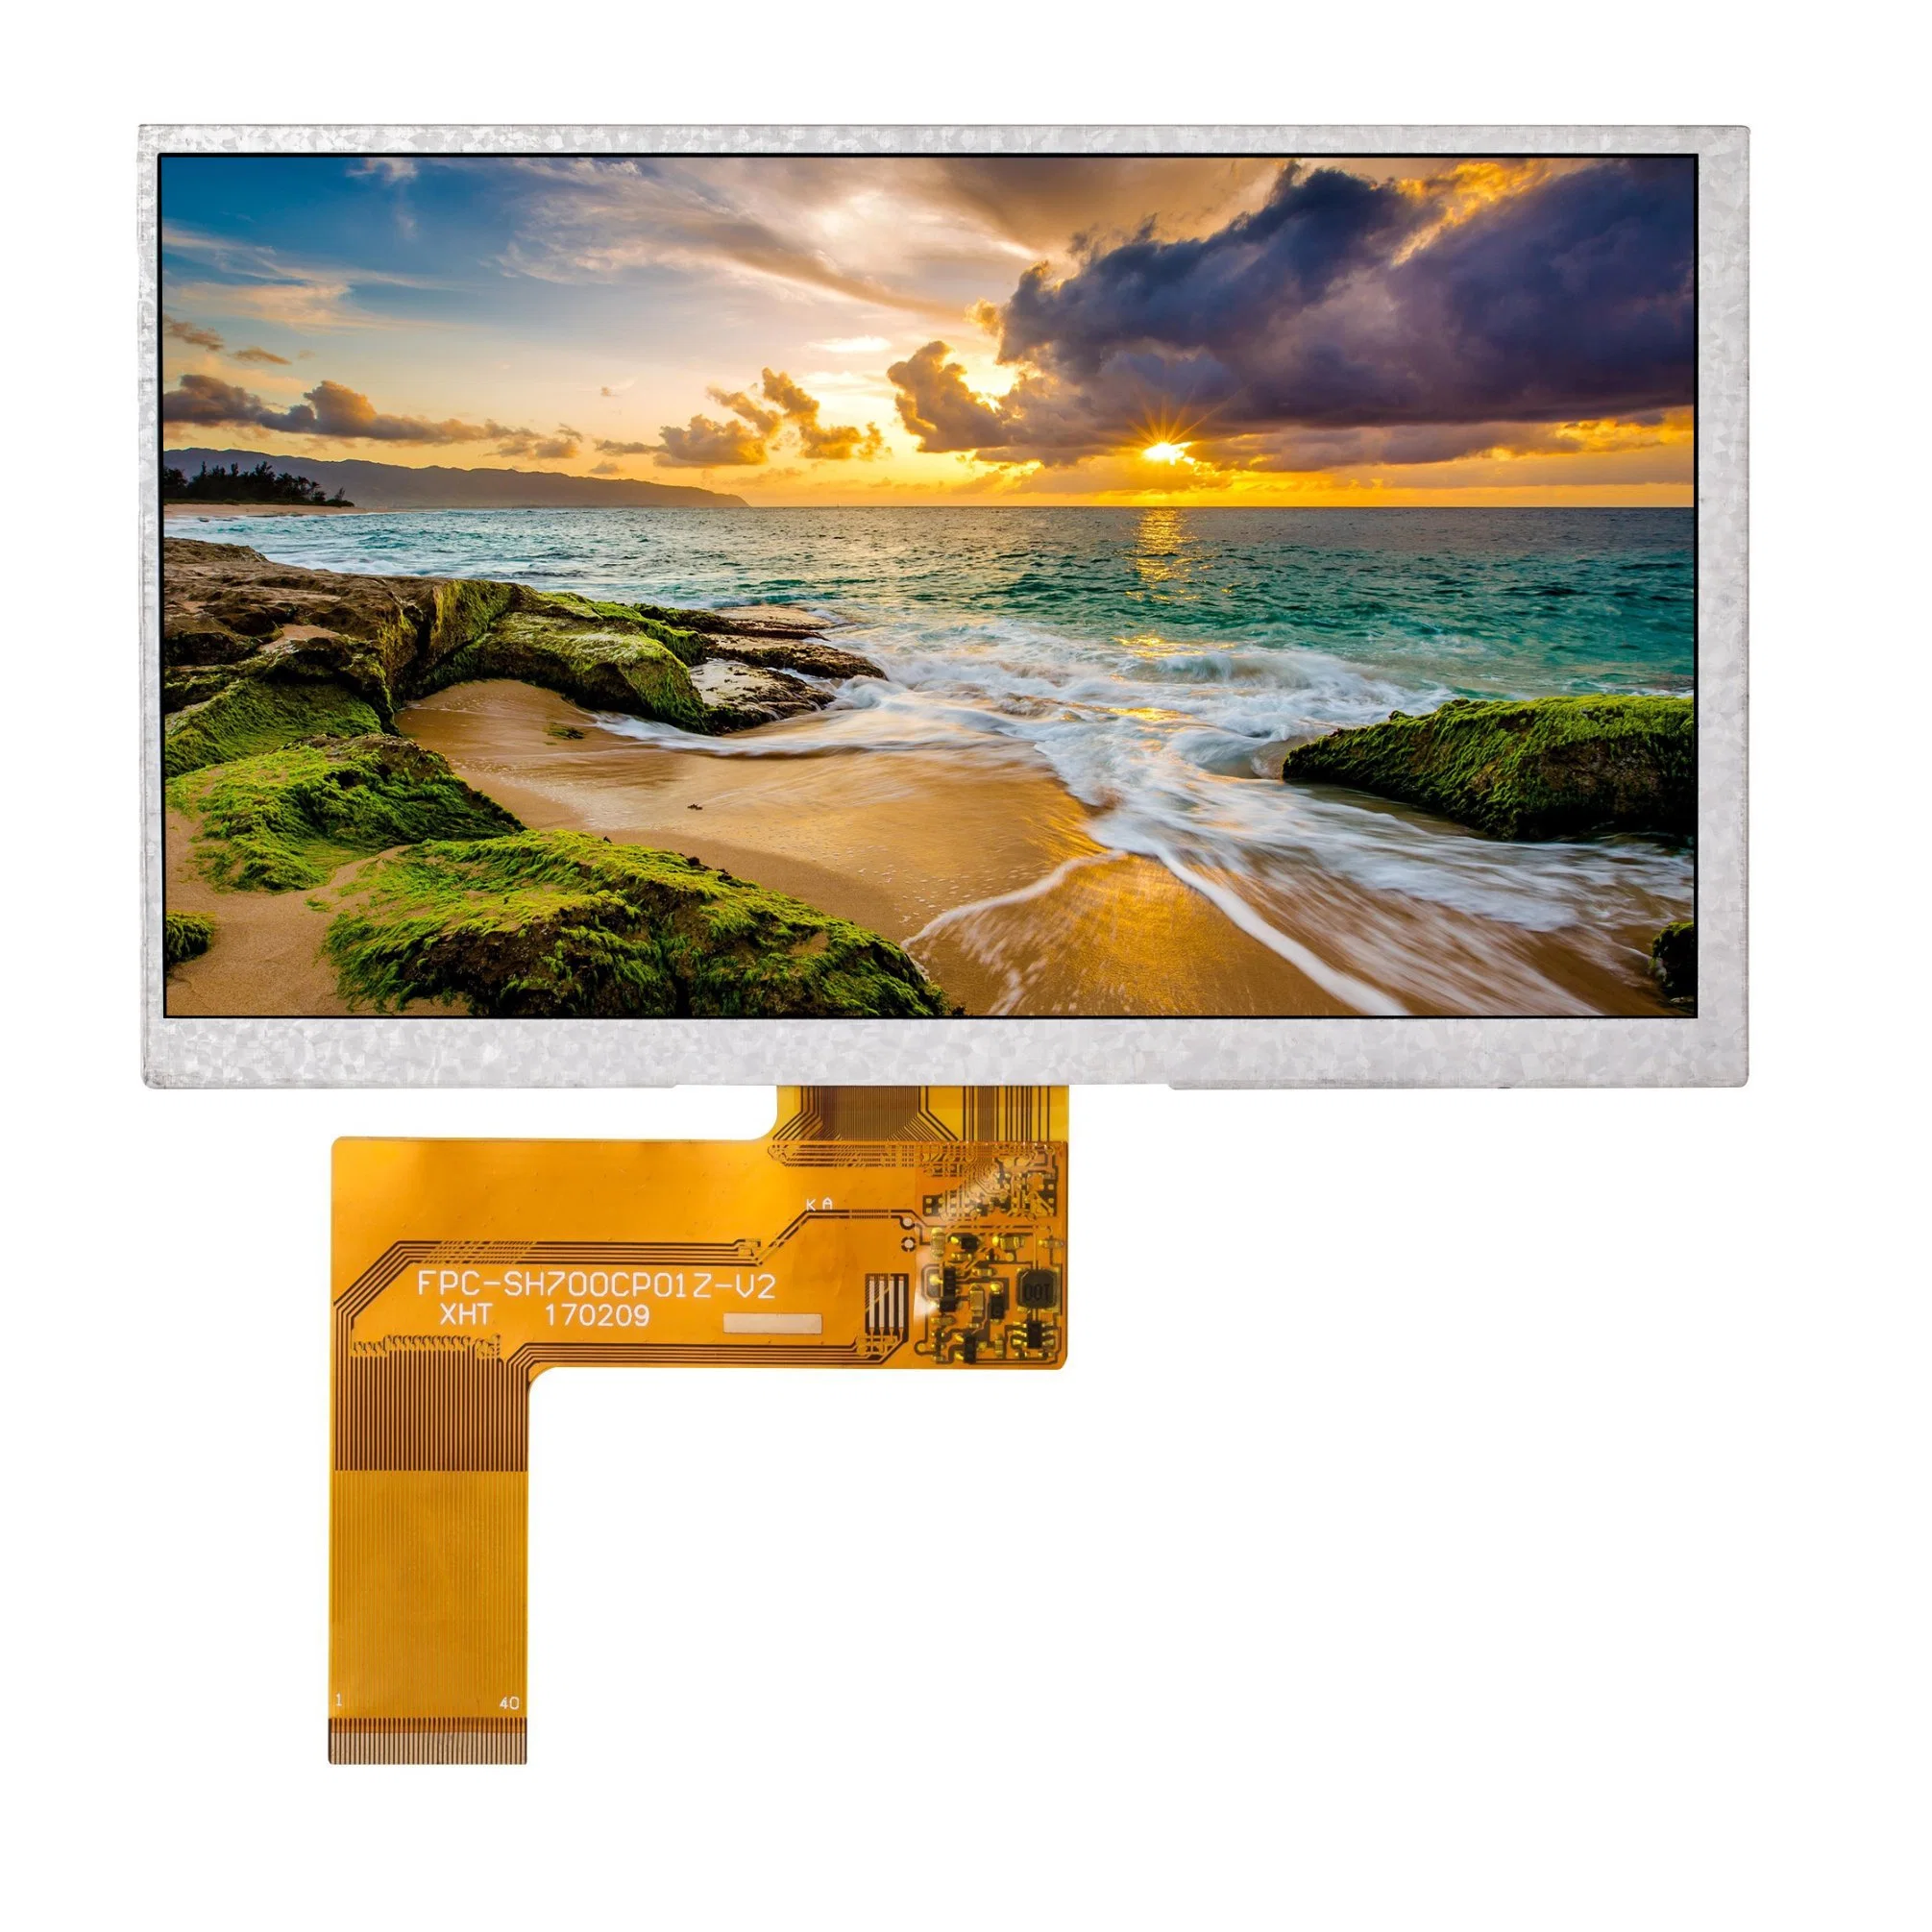 7 Inch TFT LCD Display Screen 800X480 24 Bit RGB Interface for Car